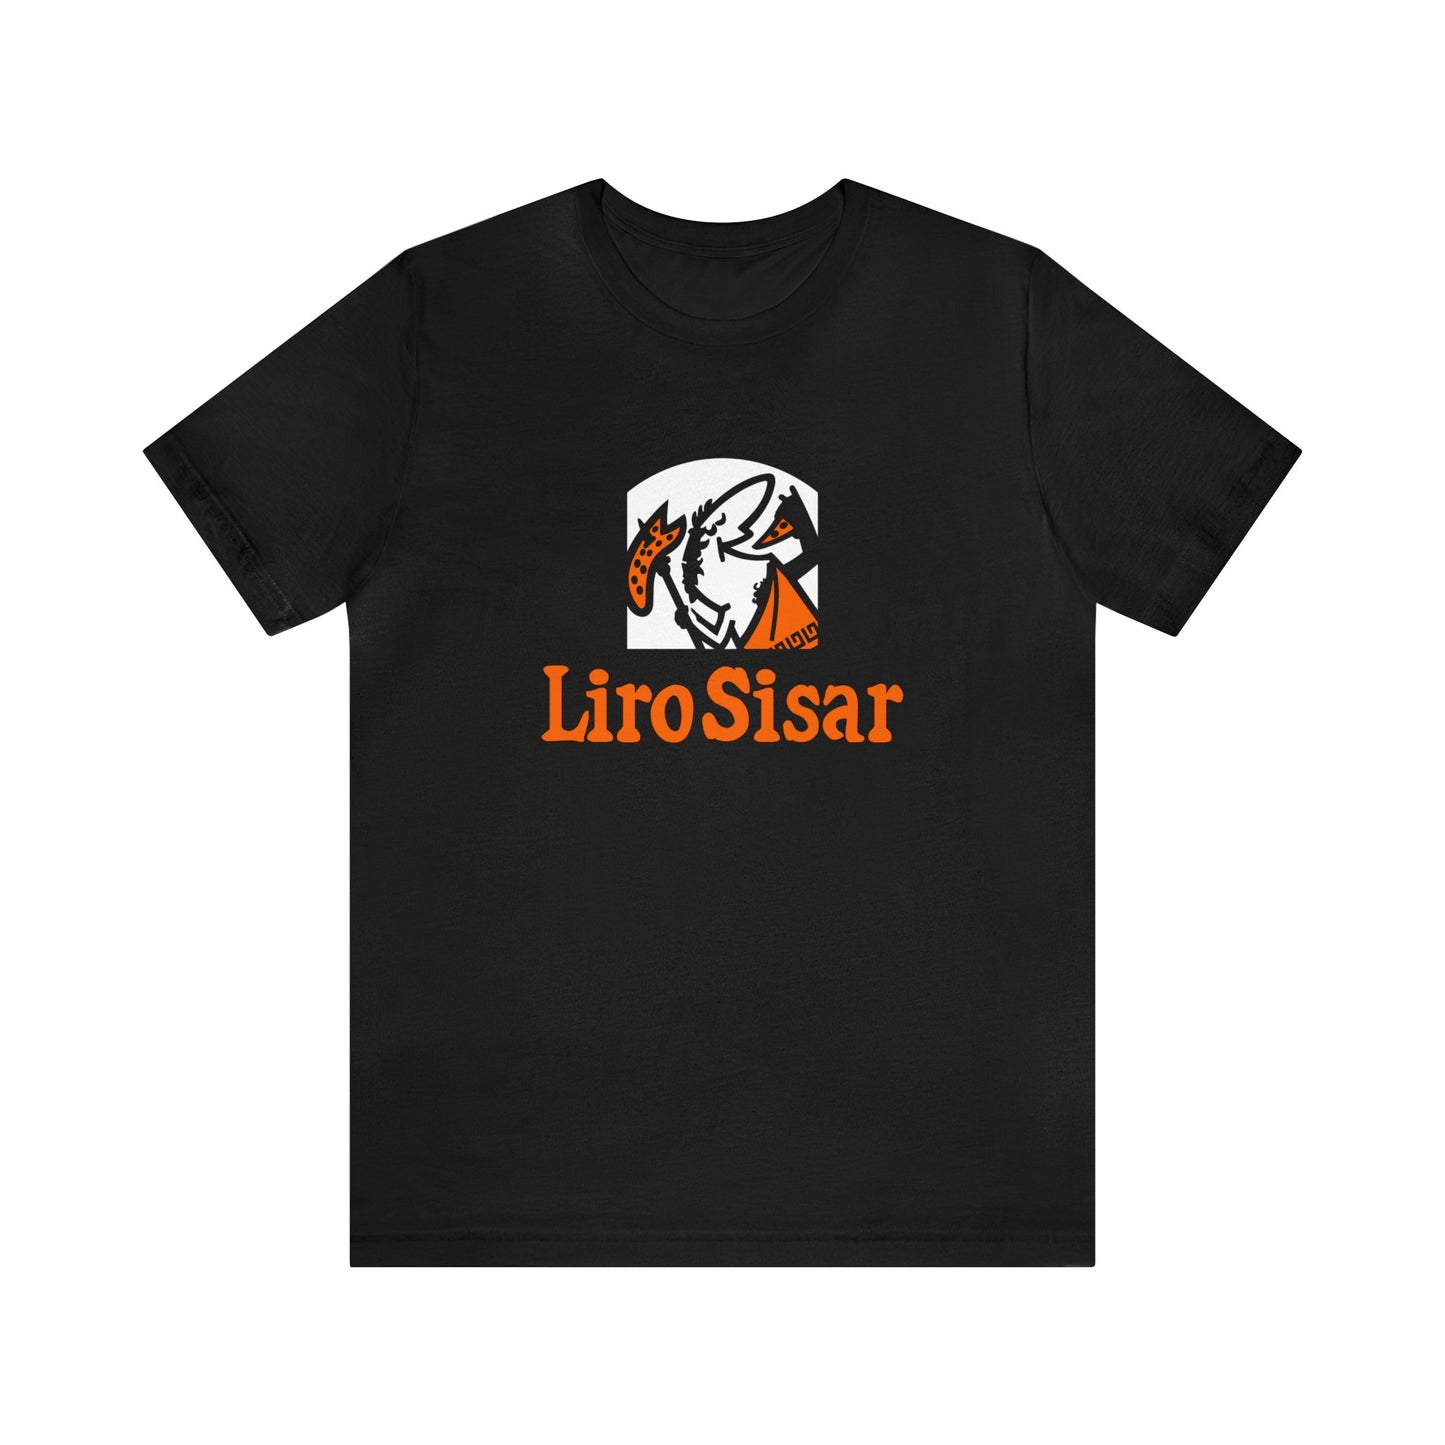 Liro Sisar T-Shirt - Hispanic Little Caesar's Logo Parody